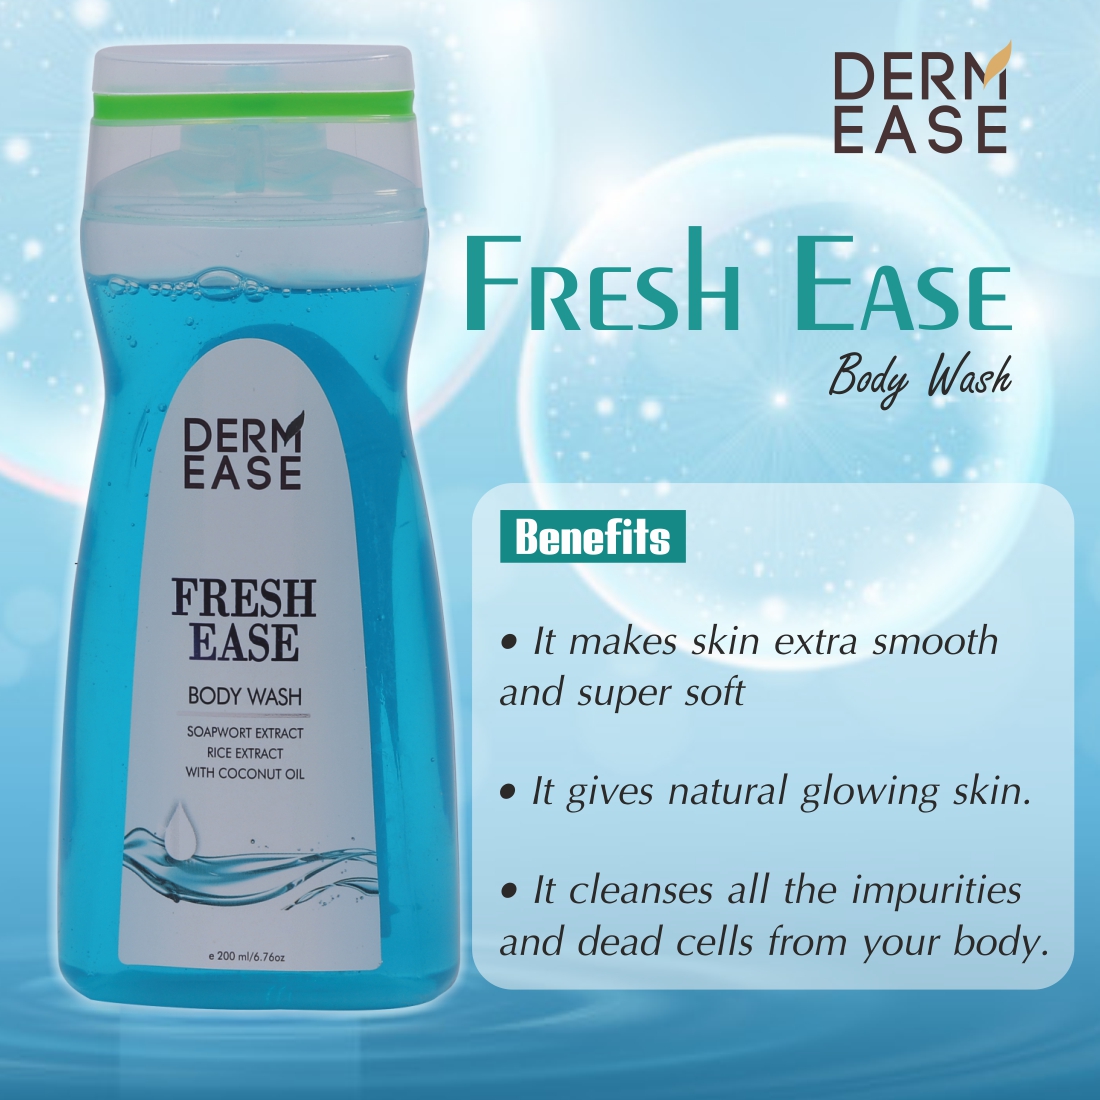 DERM EASE Fresh Ease Body Wash Combo